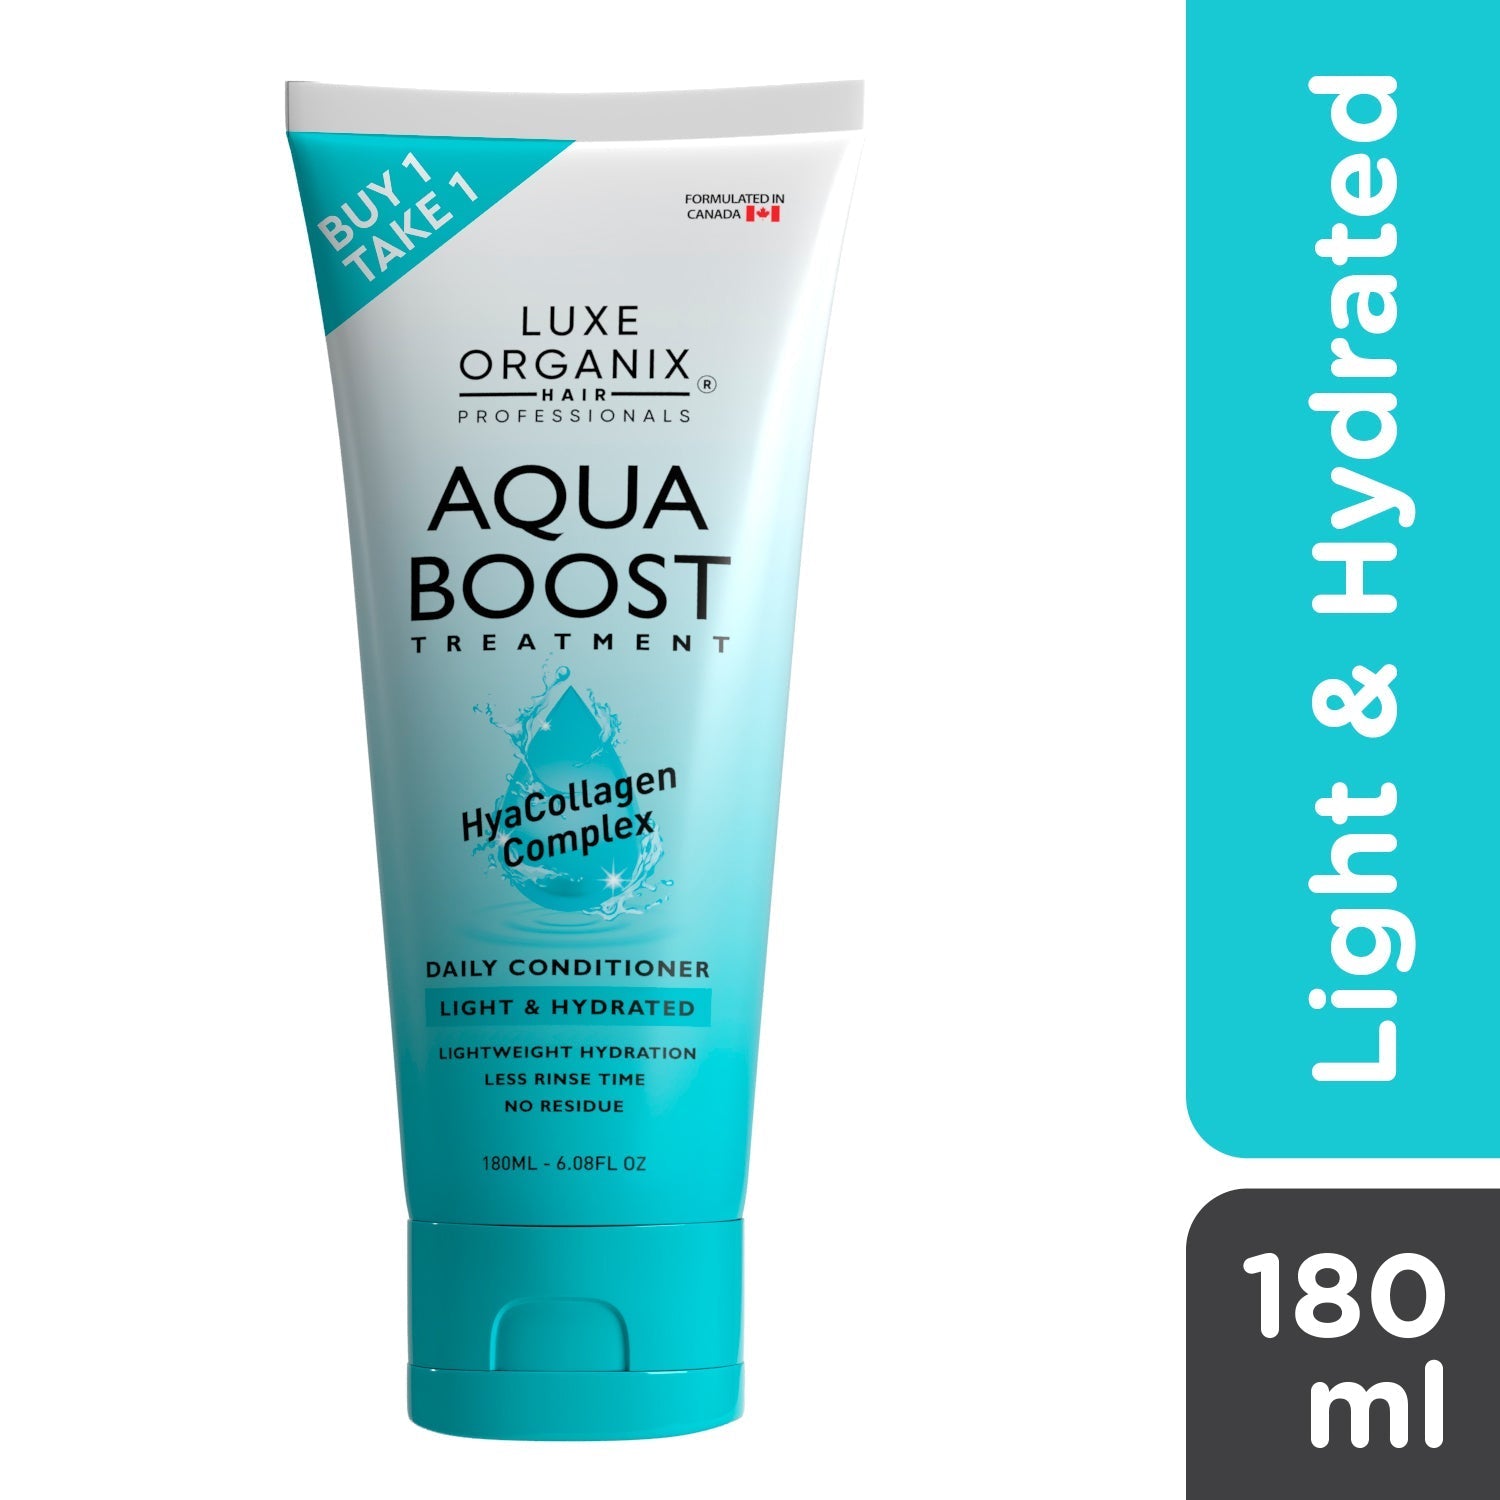 Aqua Boost Professional Treatment 180ml (Buy 1 Take 1) - Light & Hydrated